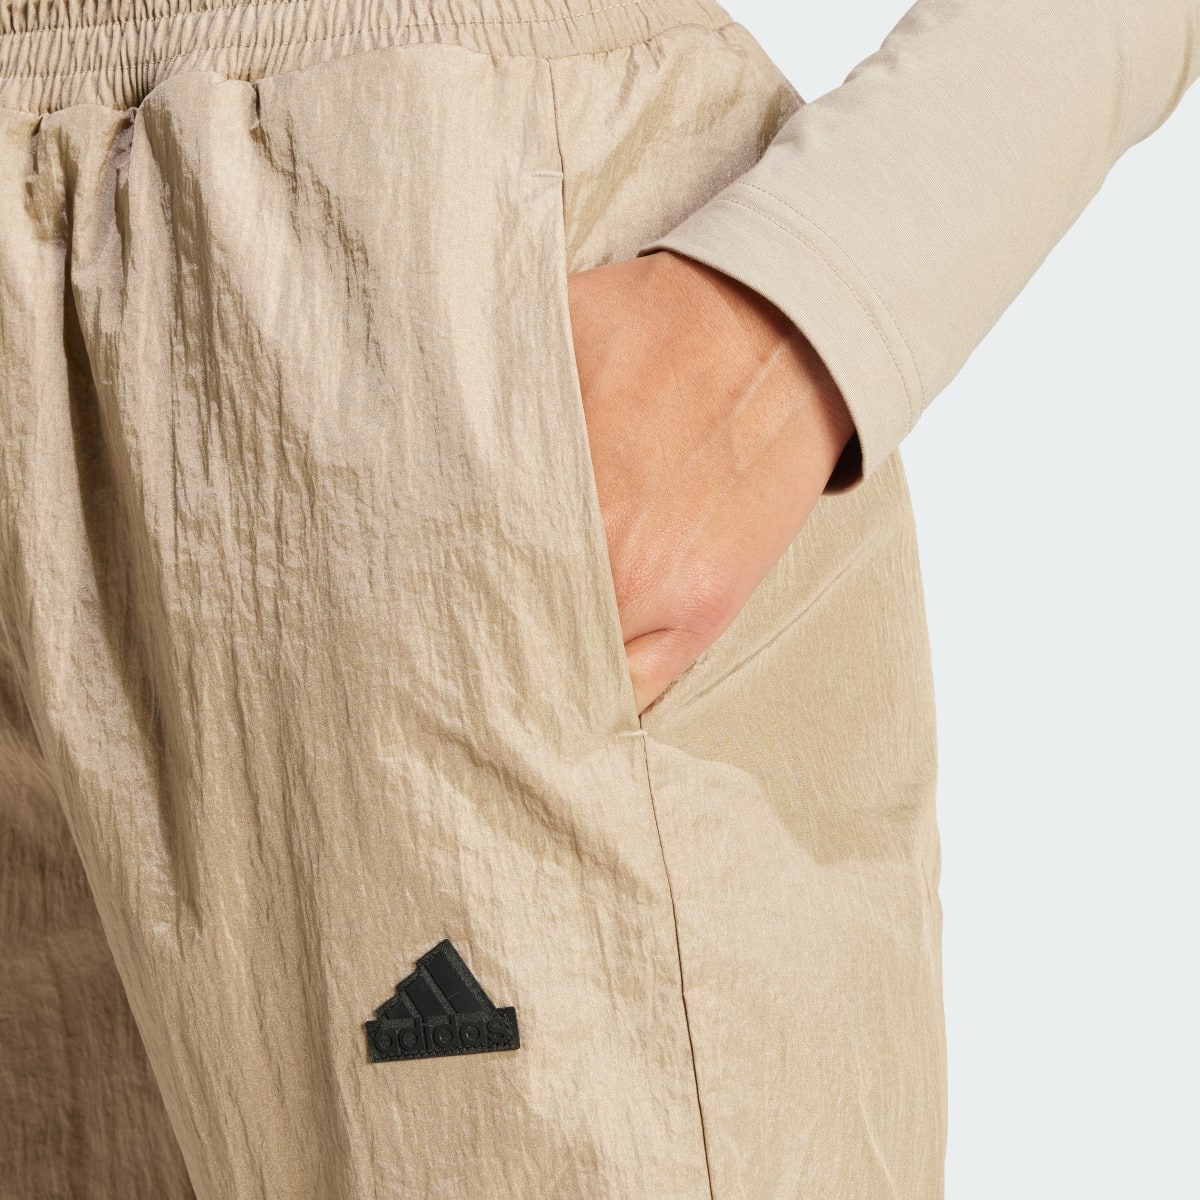 Adidas City Escape Cargo Pants. 5